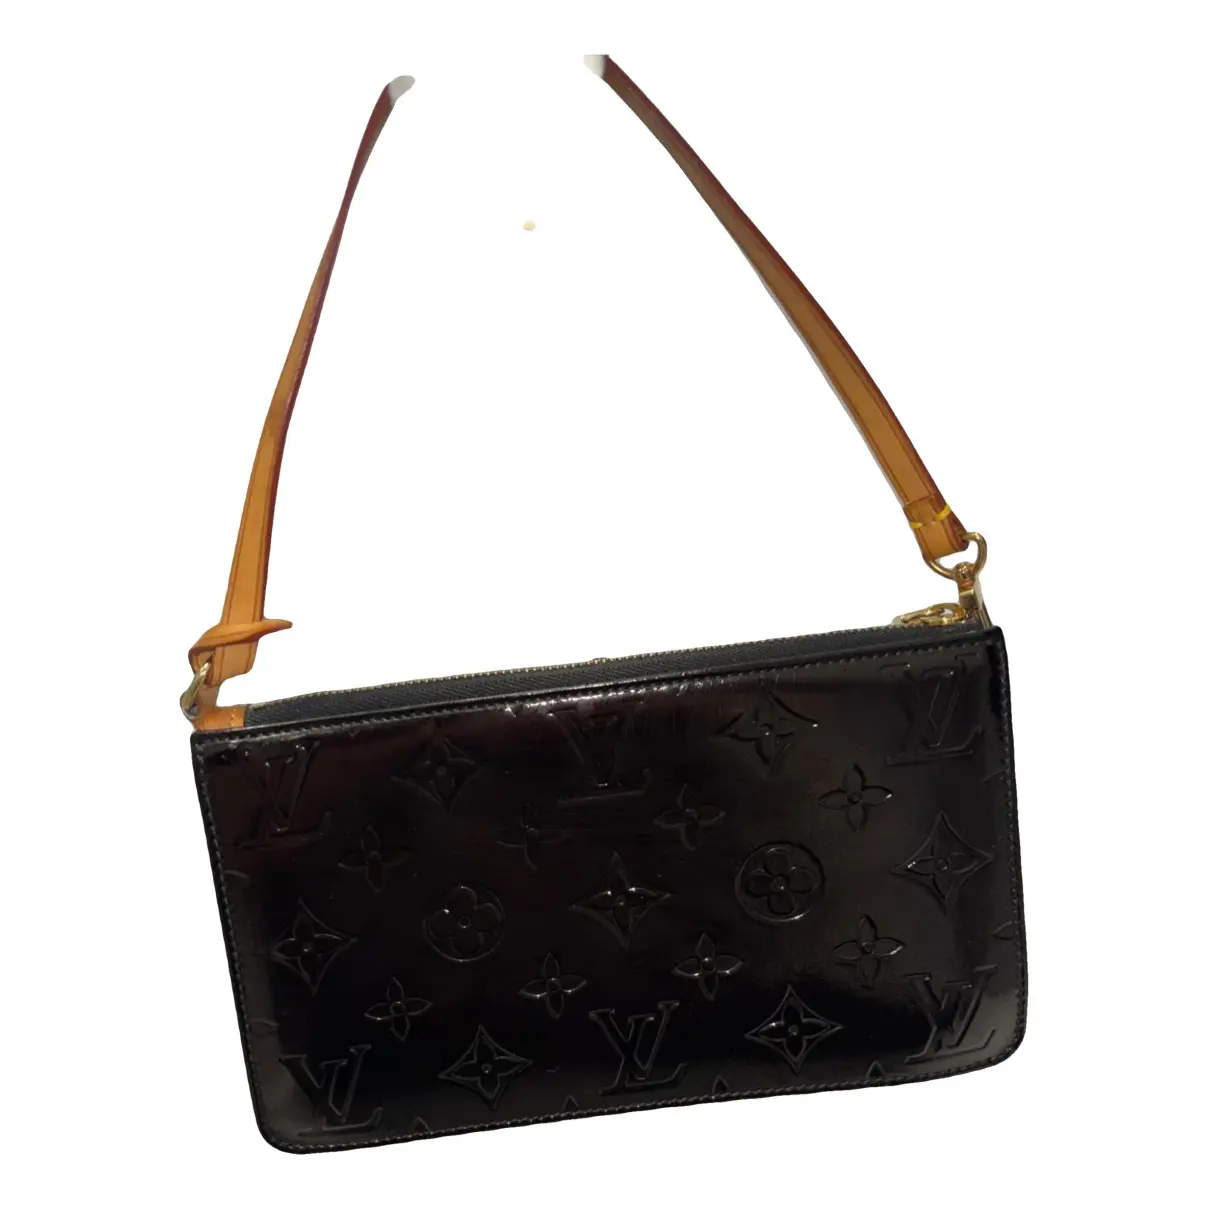 Lexington patent leather handbag